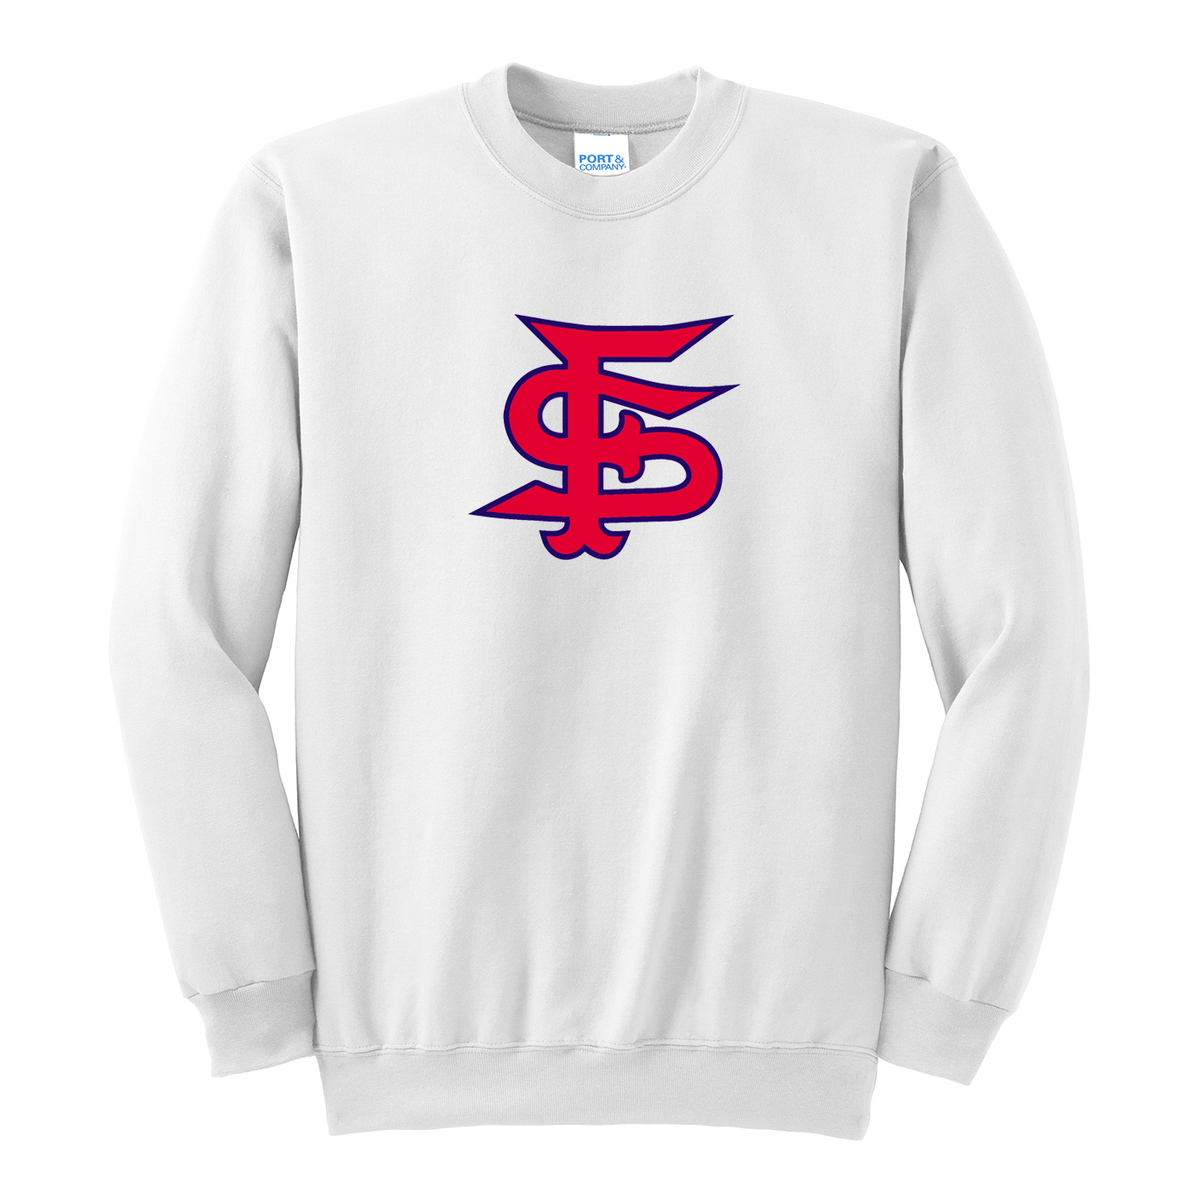 Fallon Sports Crew Neck Sweater